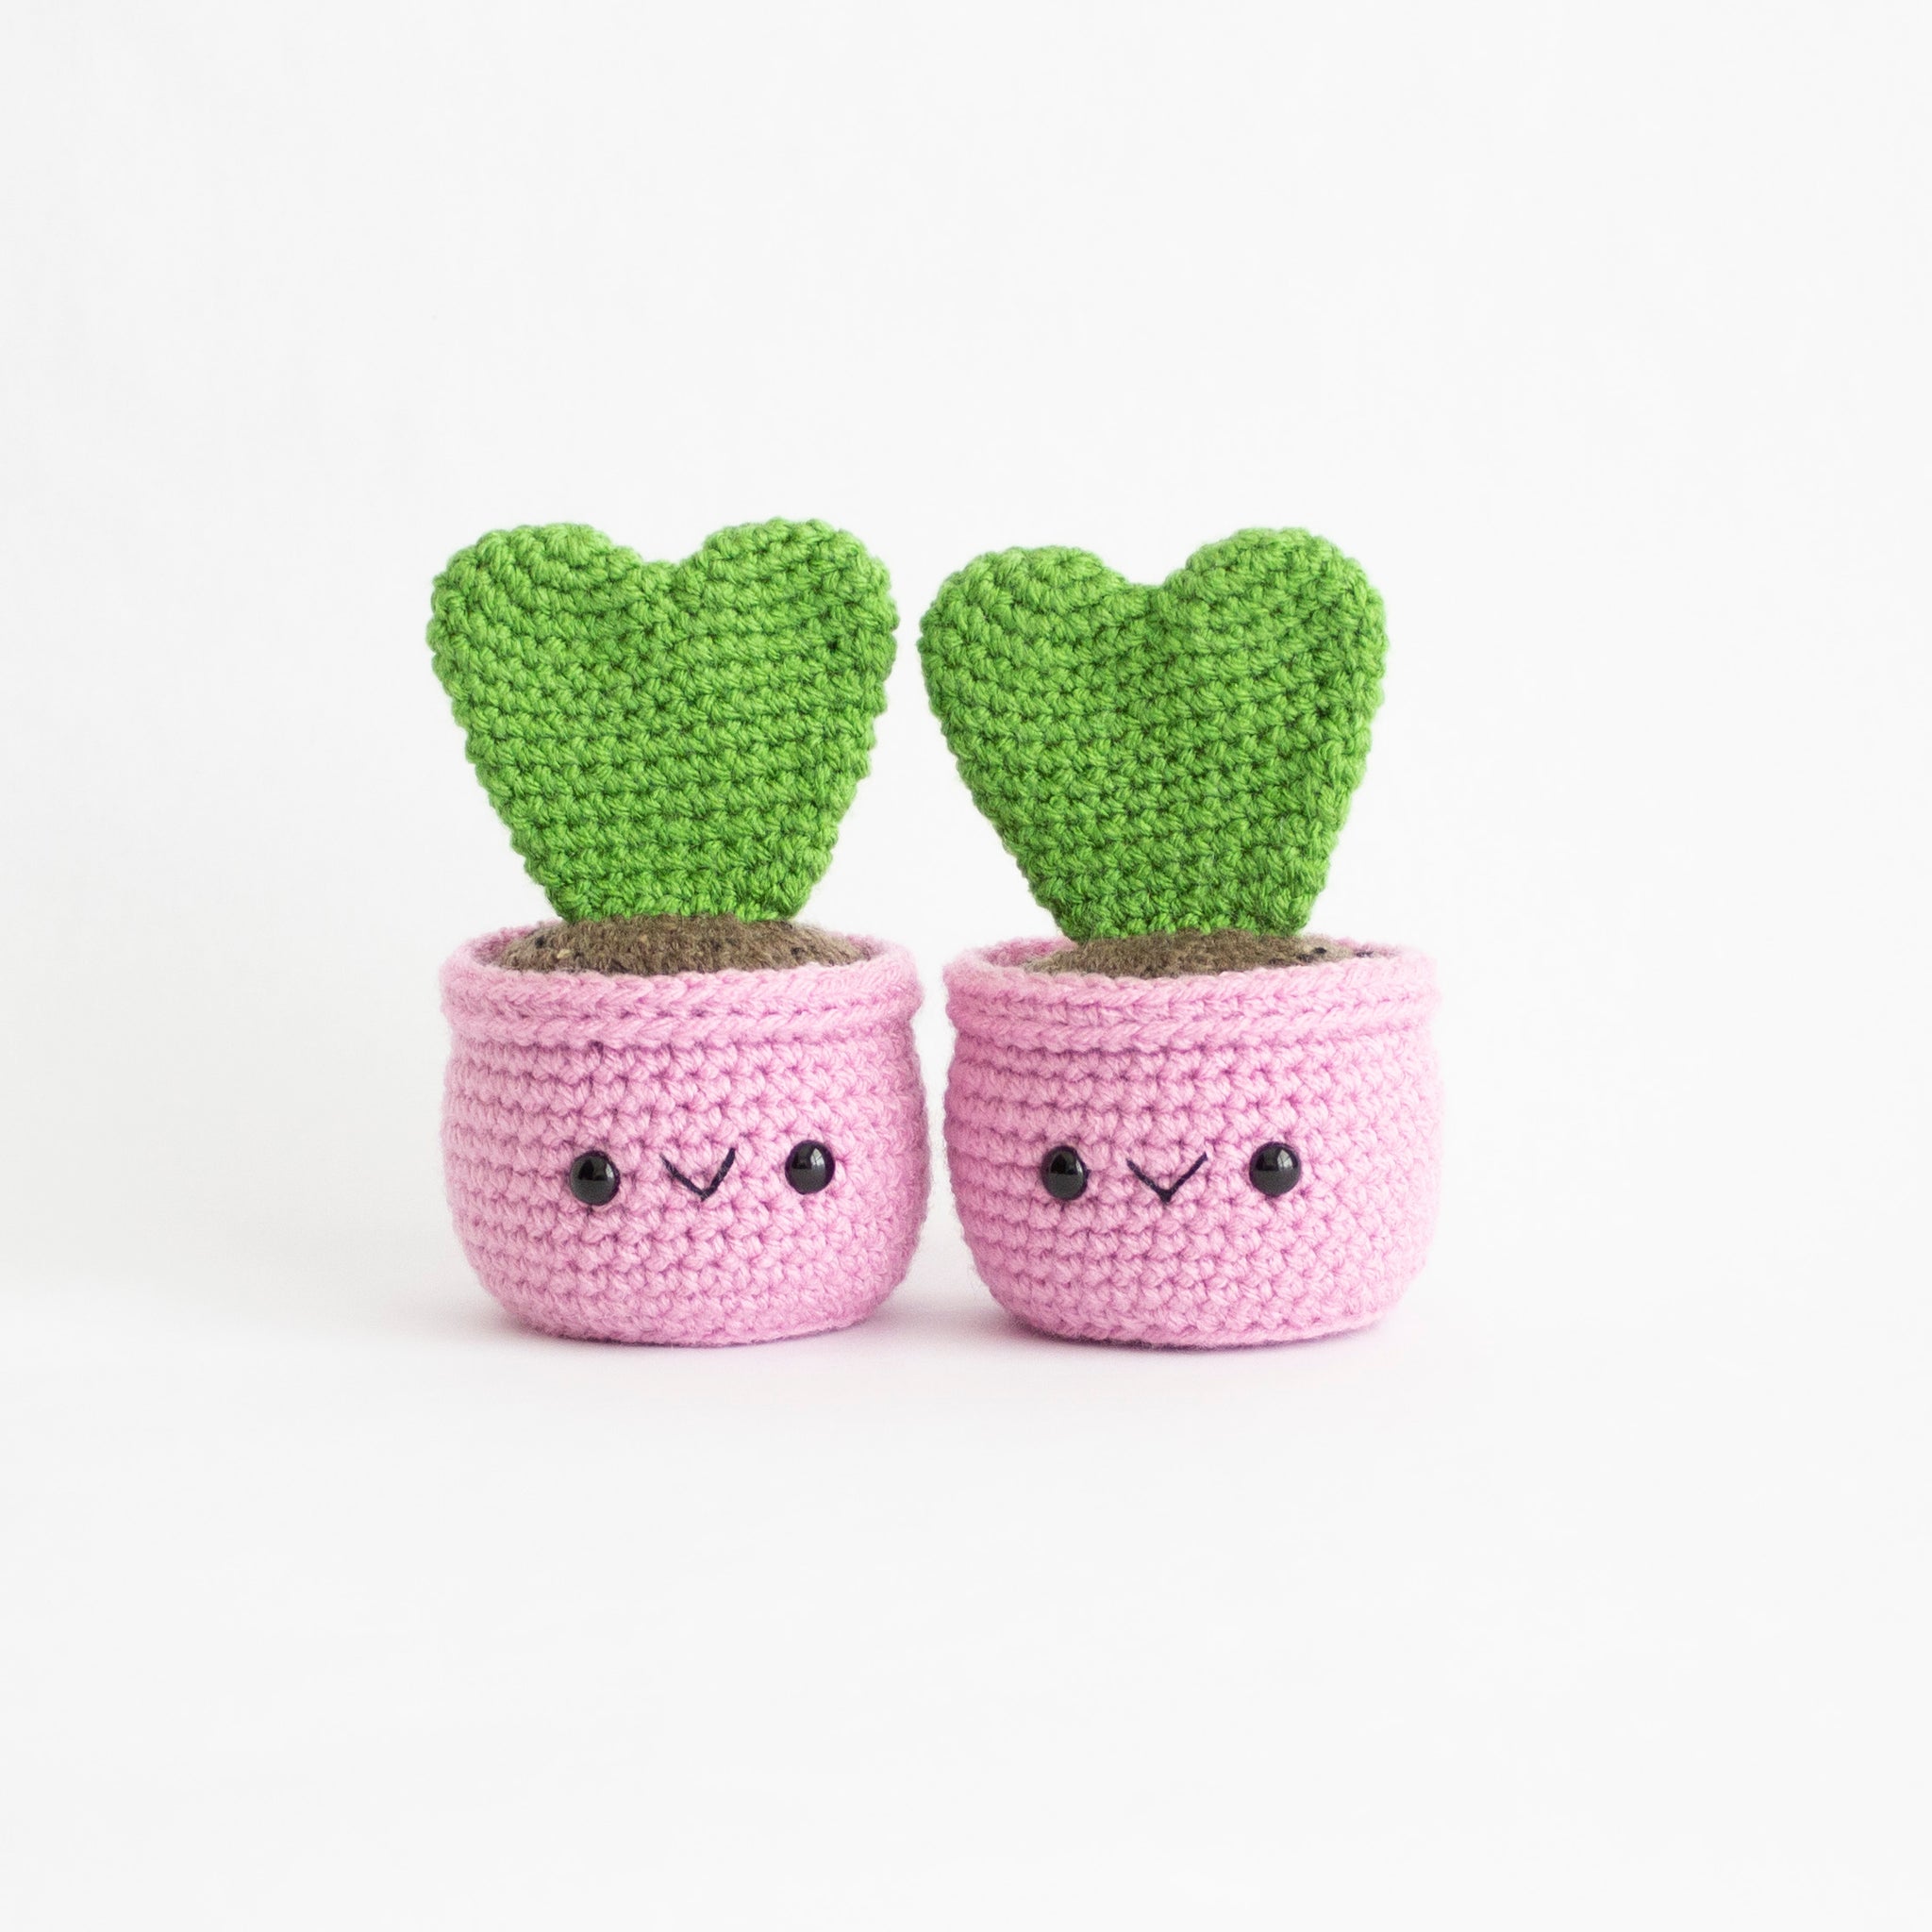 Crochet Hoya Heart Succulent- MADE TO ORDER